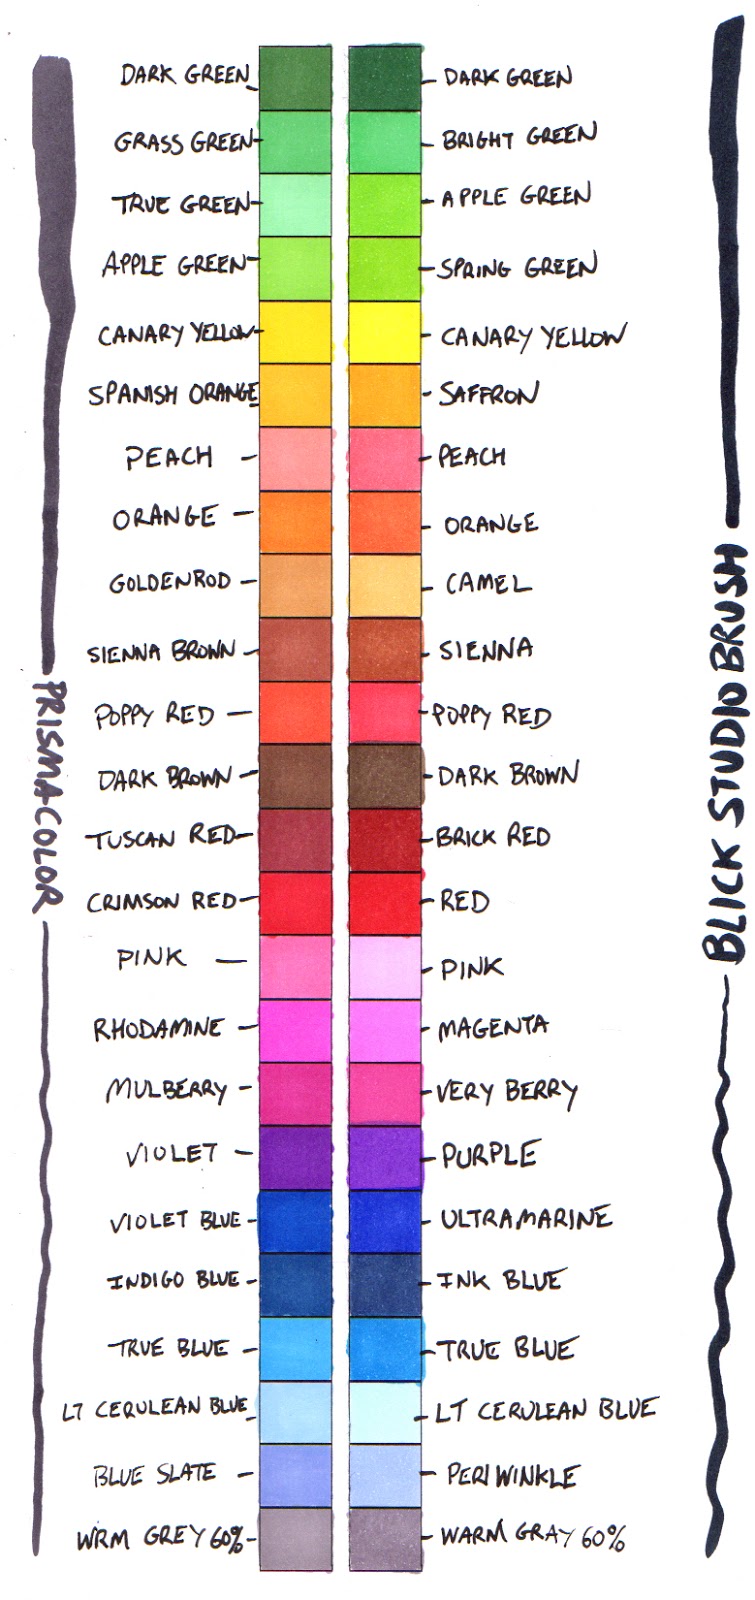 Blick Studio Markers Color Chart